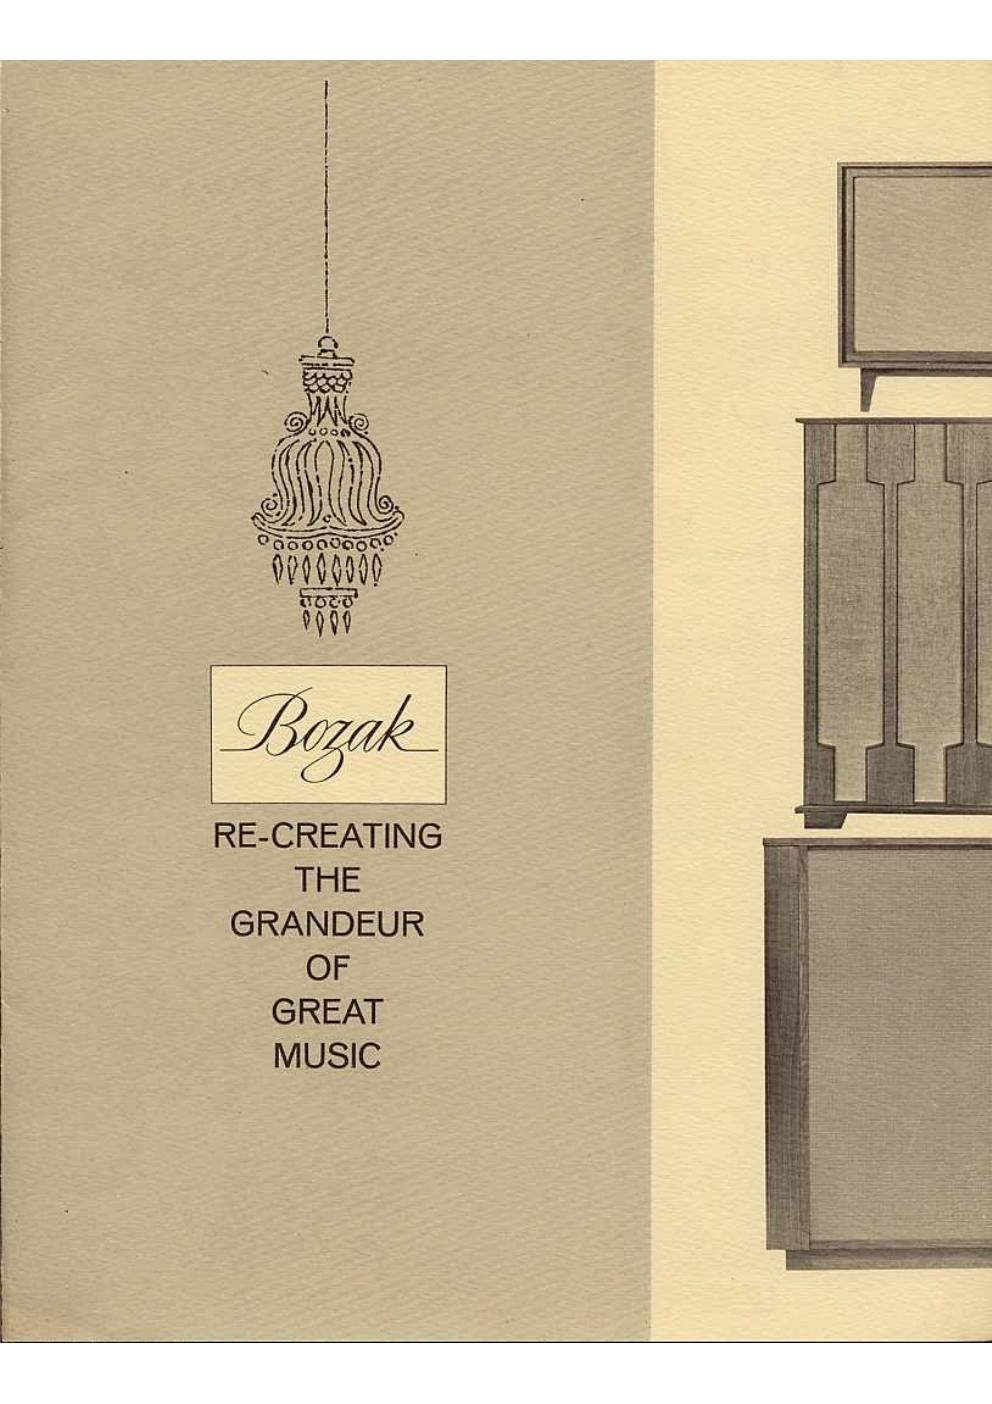 bozak brochure 1968